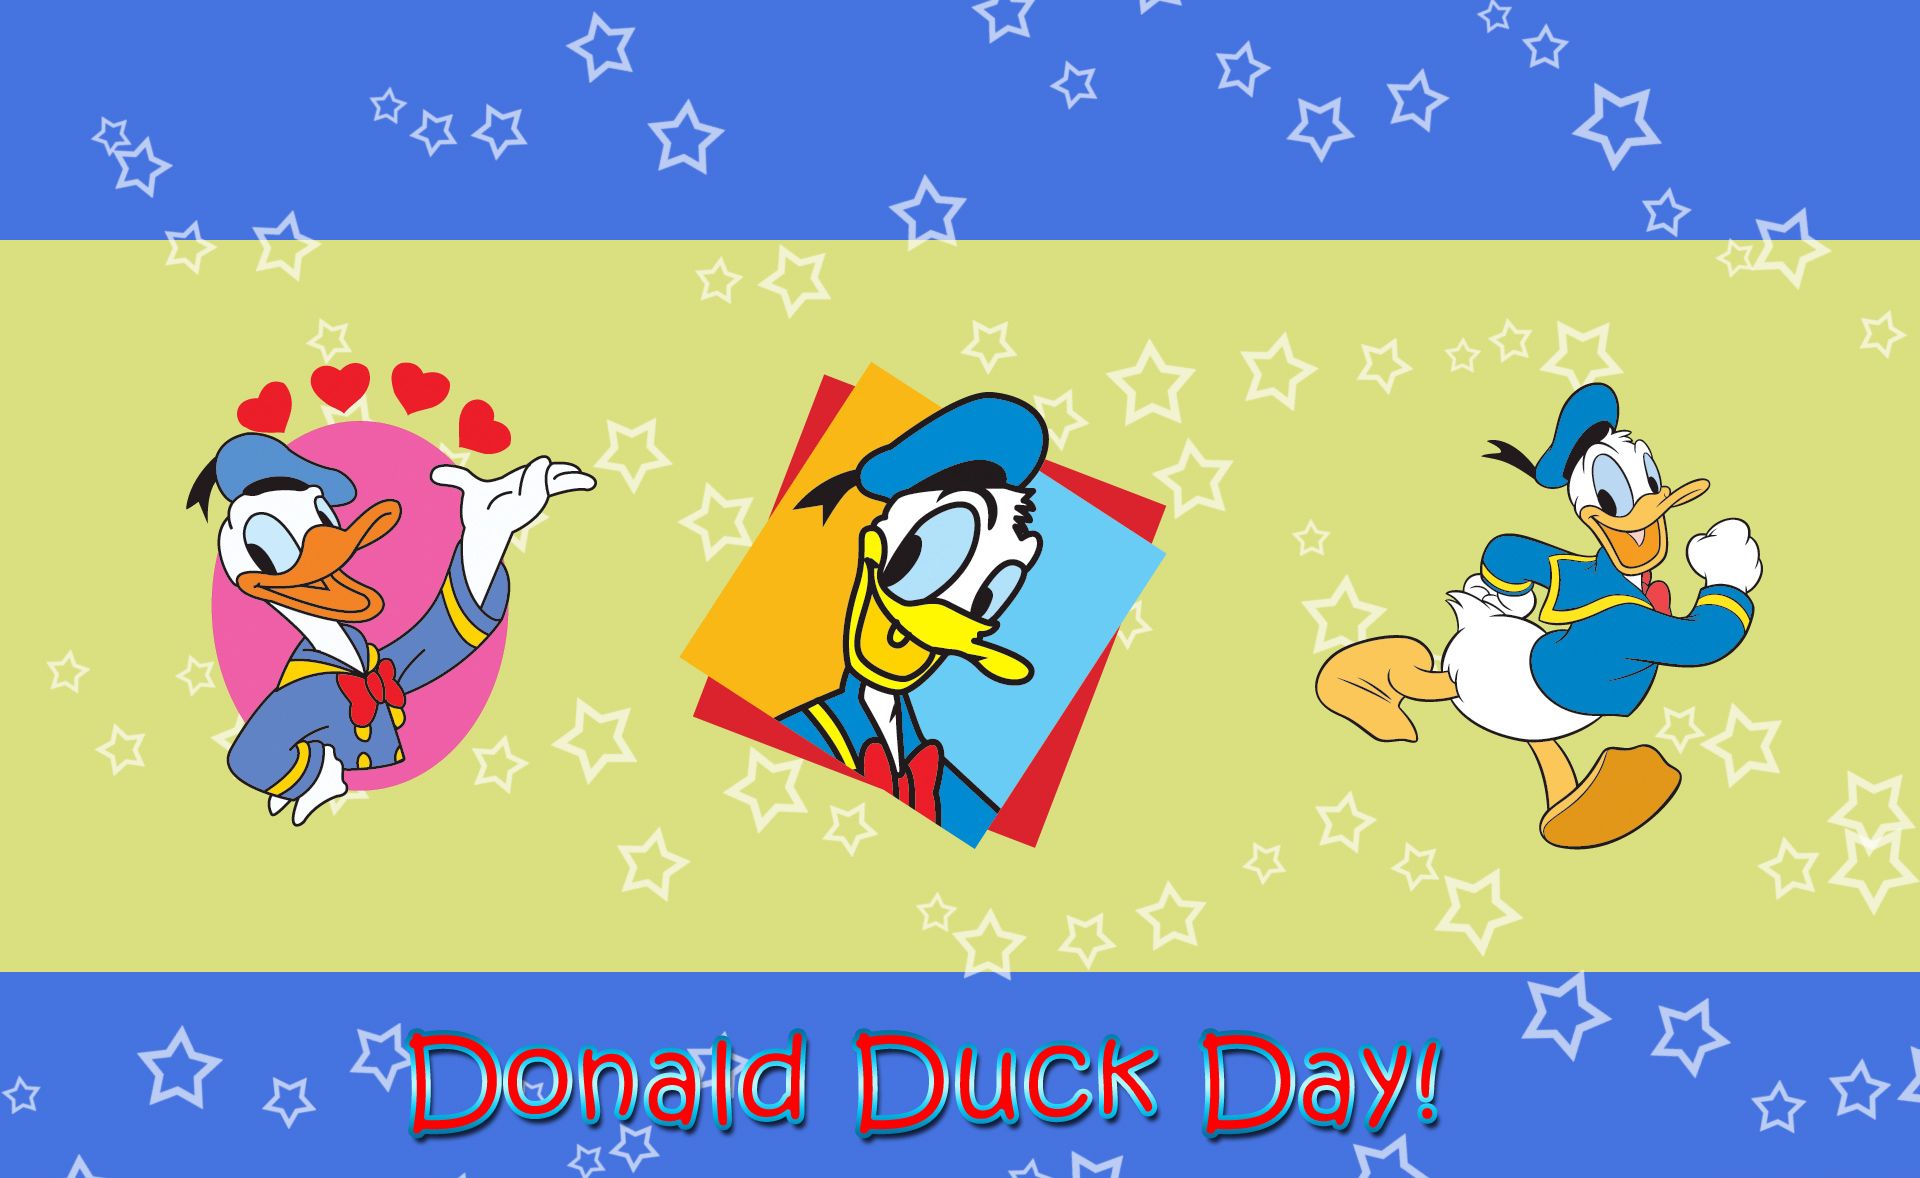 Donald duck day wallpaper for your desktop - Duck